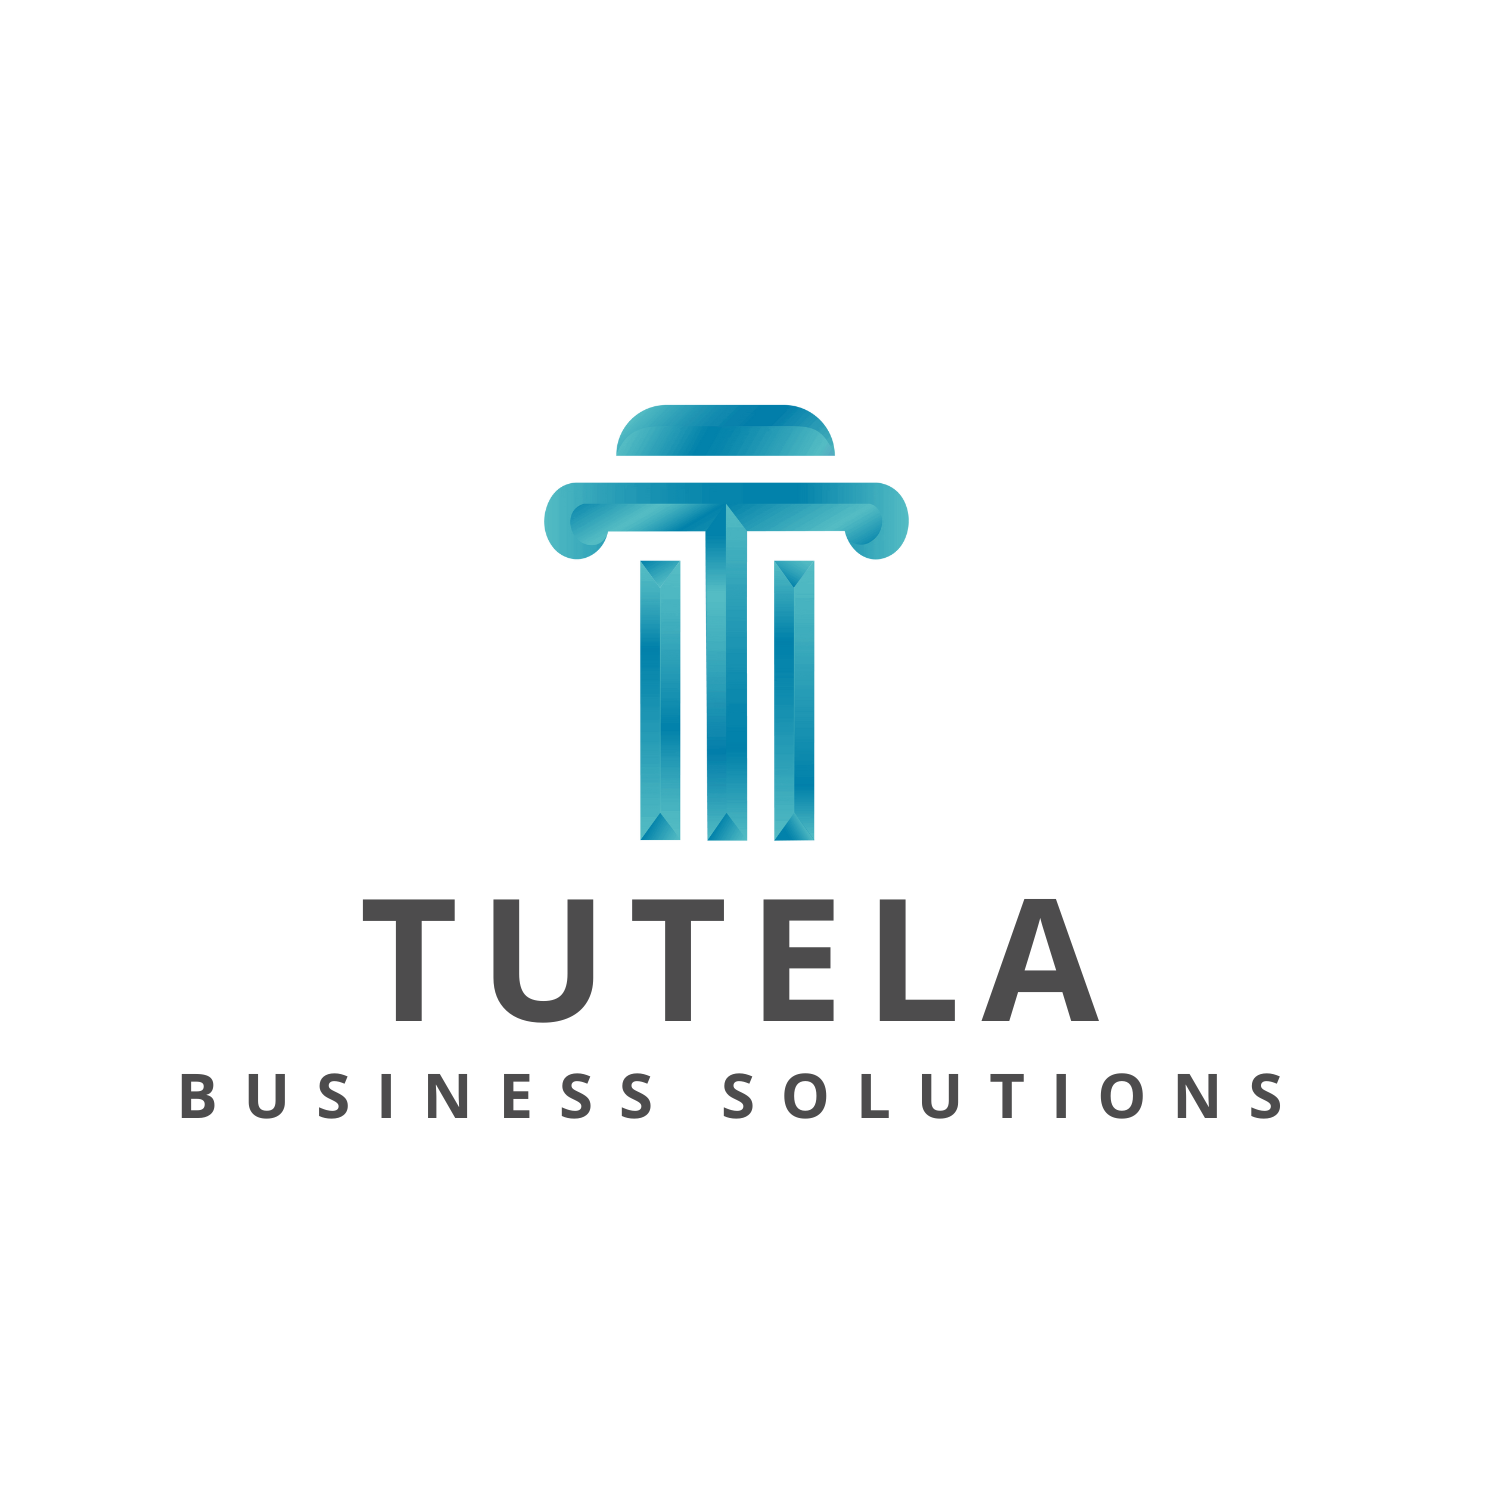 Tutela Business Solutions